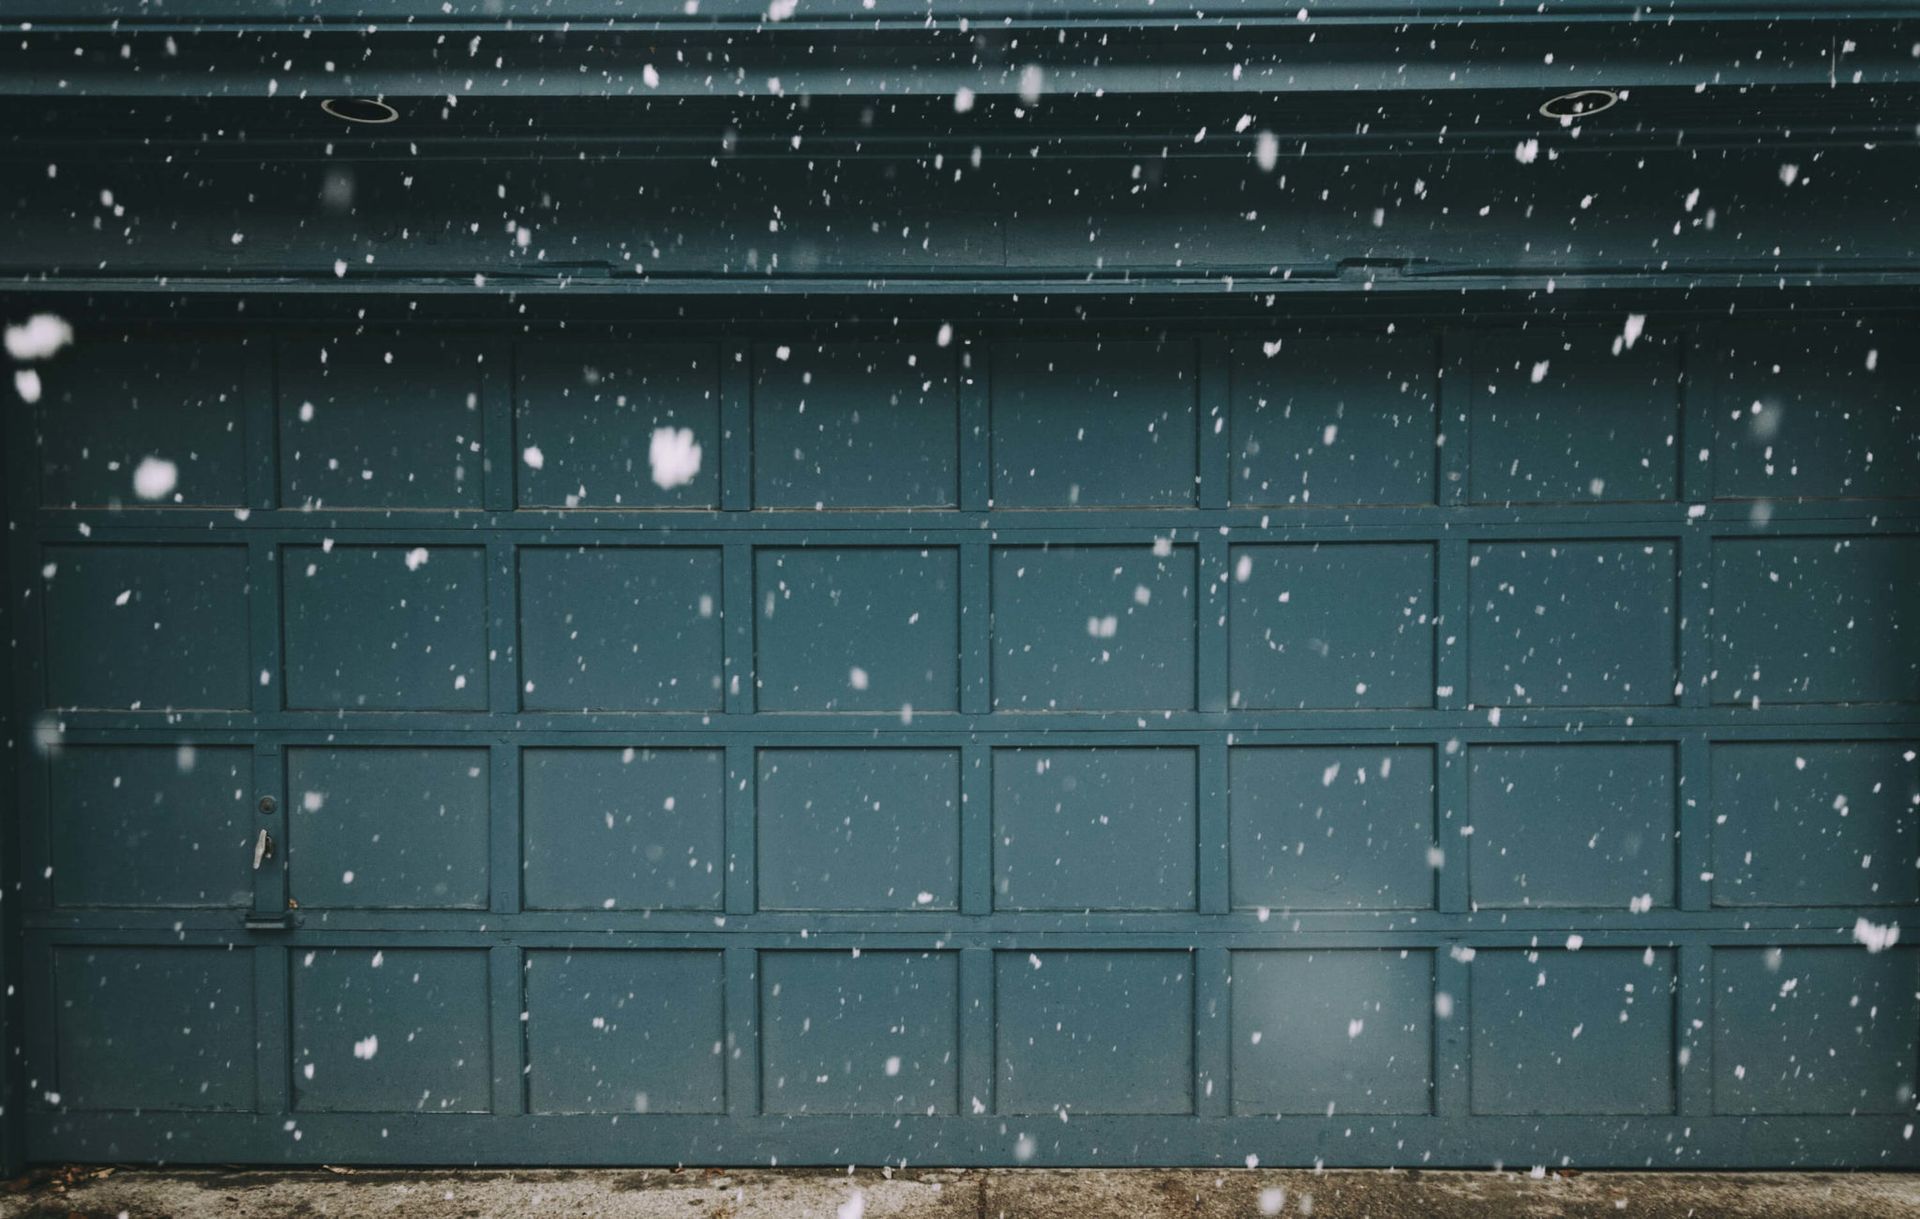 It is snowing outside of a garage door.